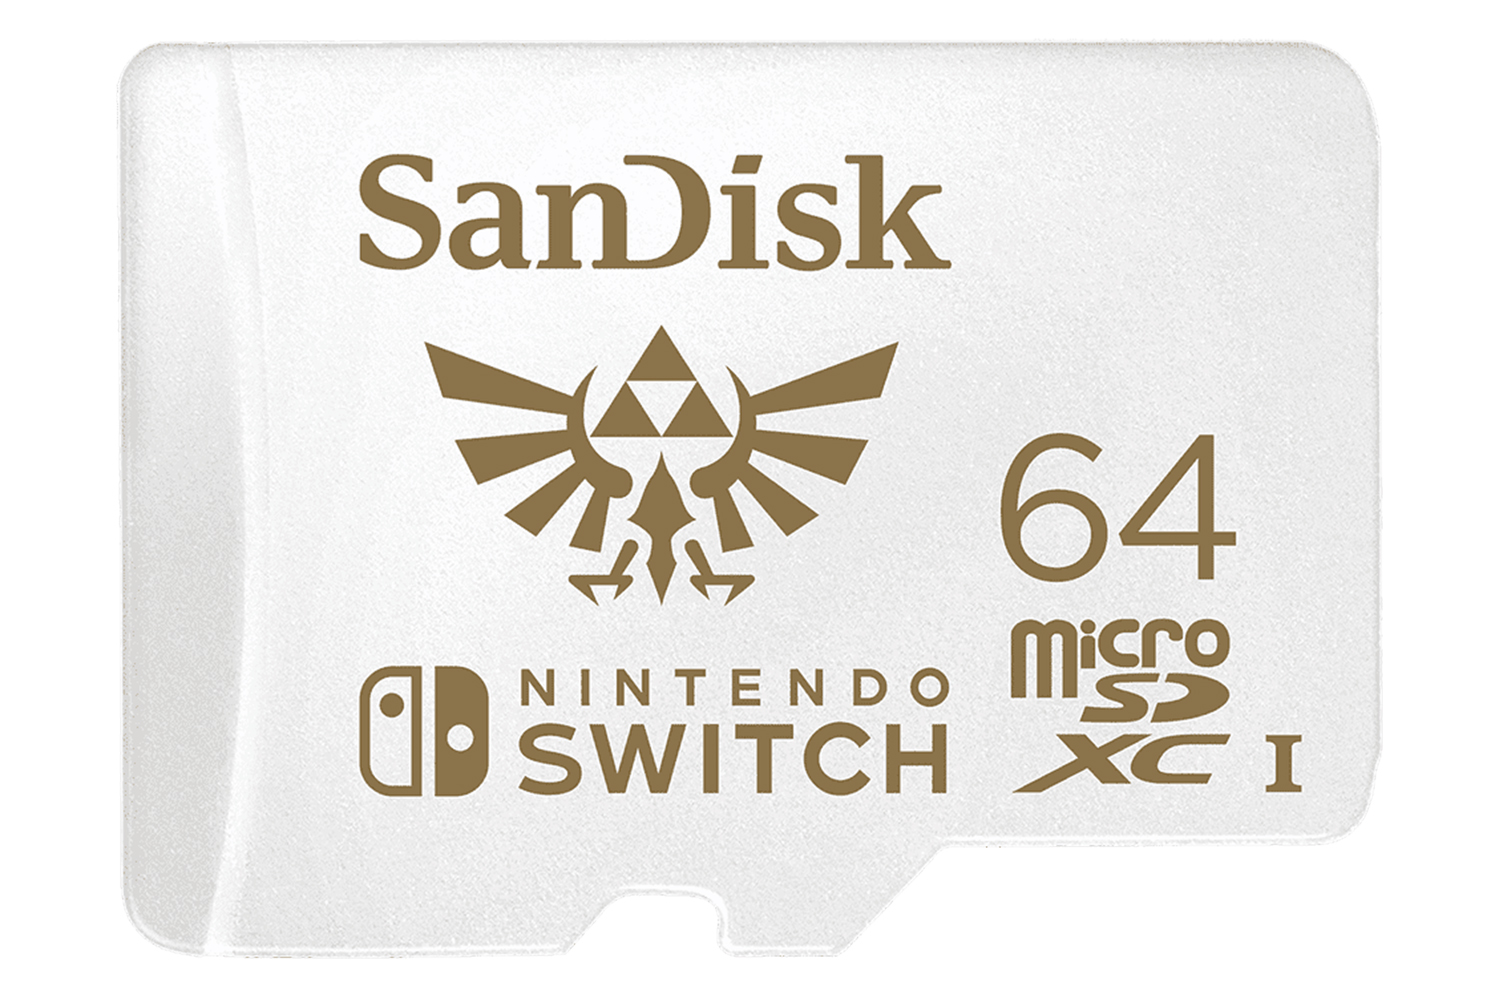 nintendo switch new memory card